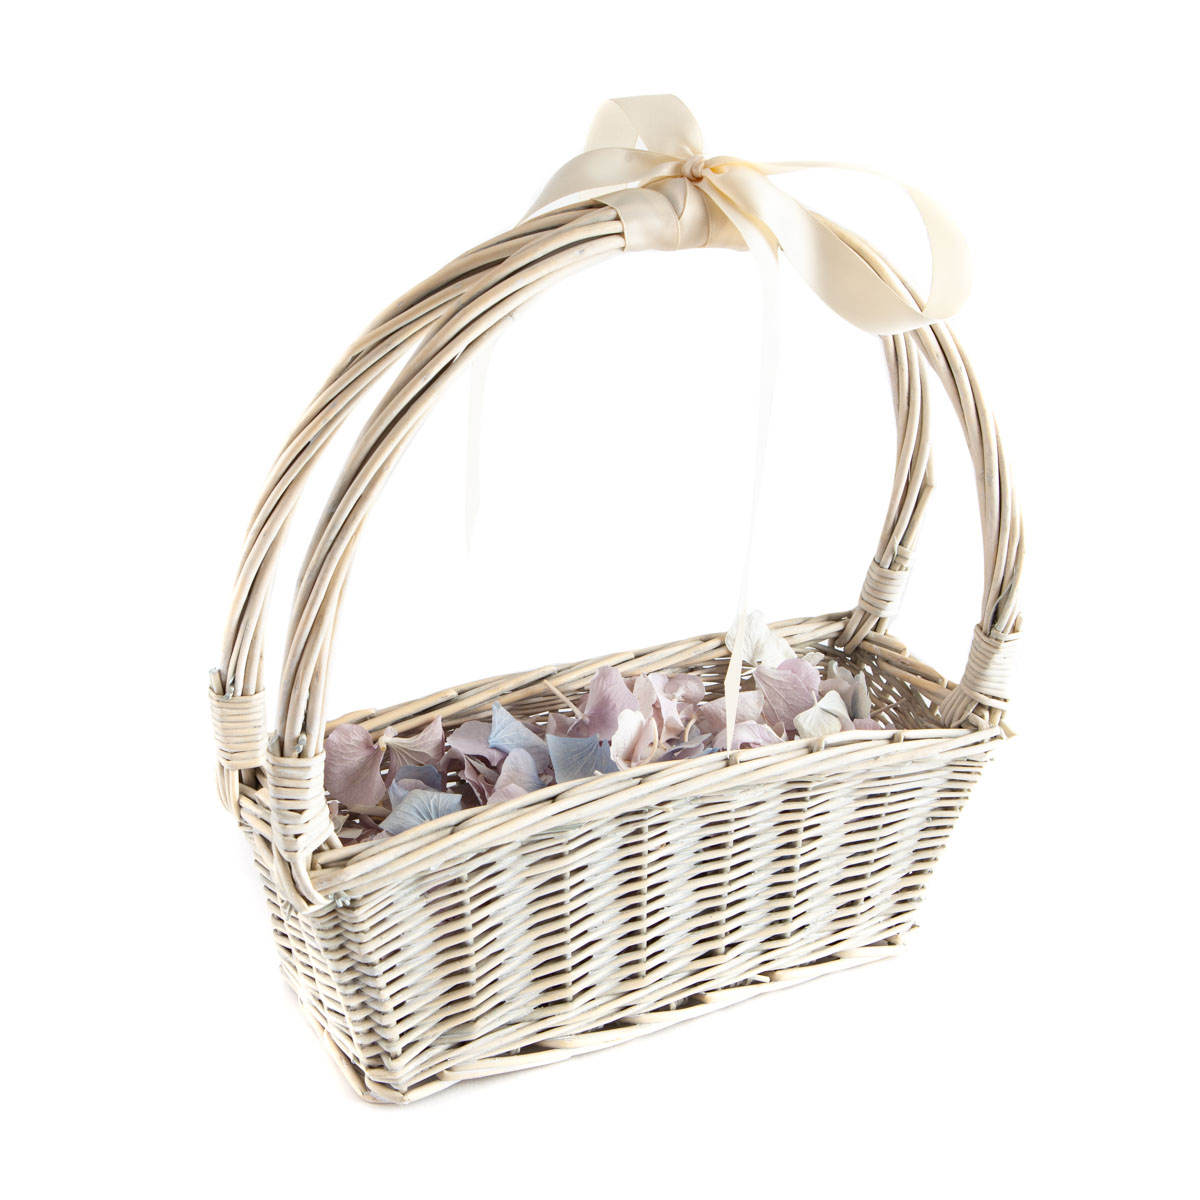 Biodegradable Confetti - Lilac, Blue & White Hydrangea Petals - Small Flower Girl Basket